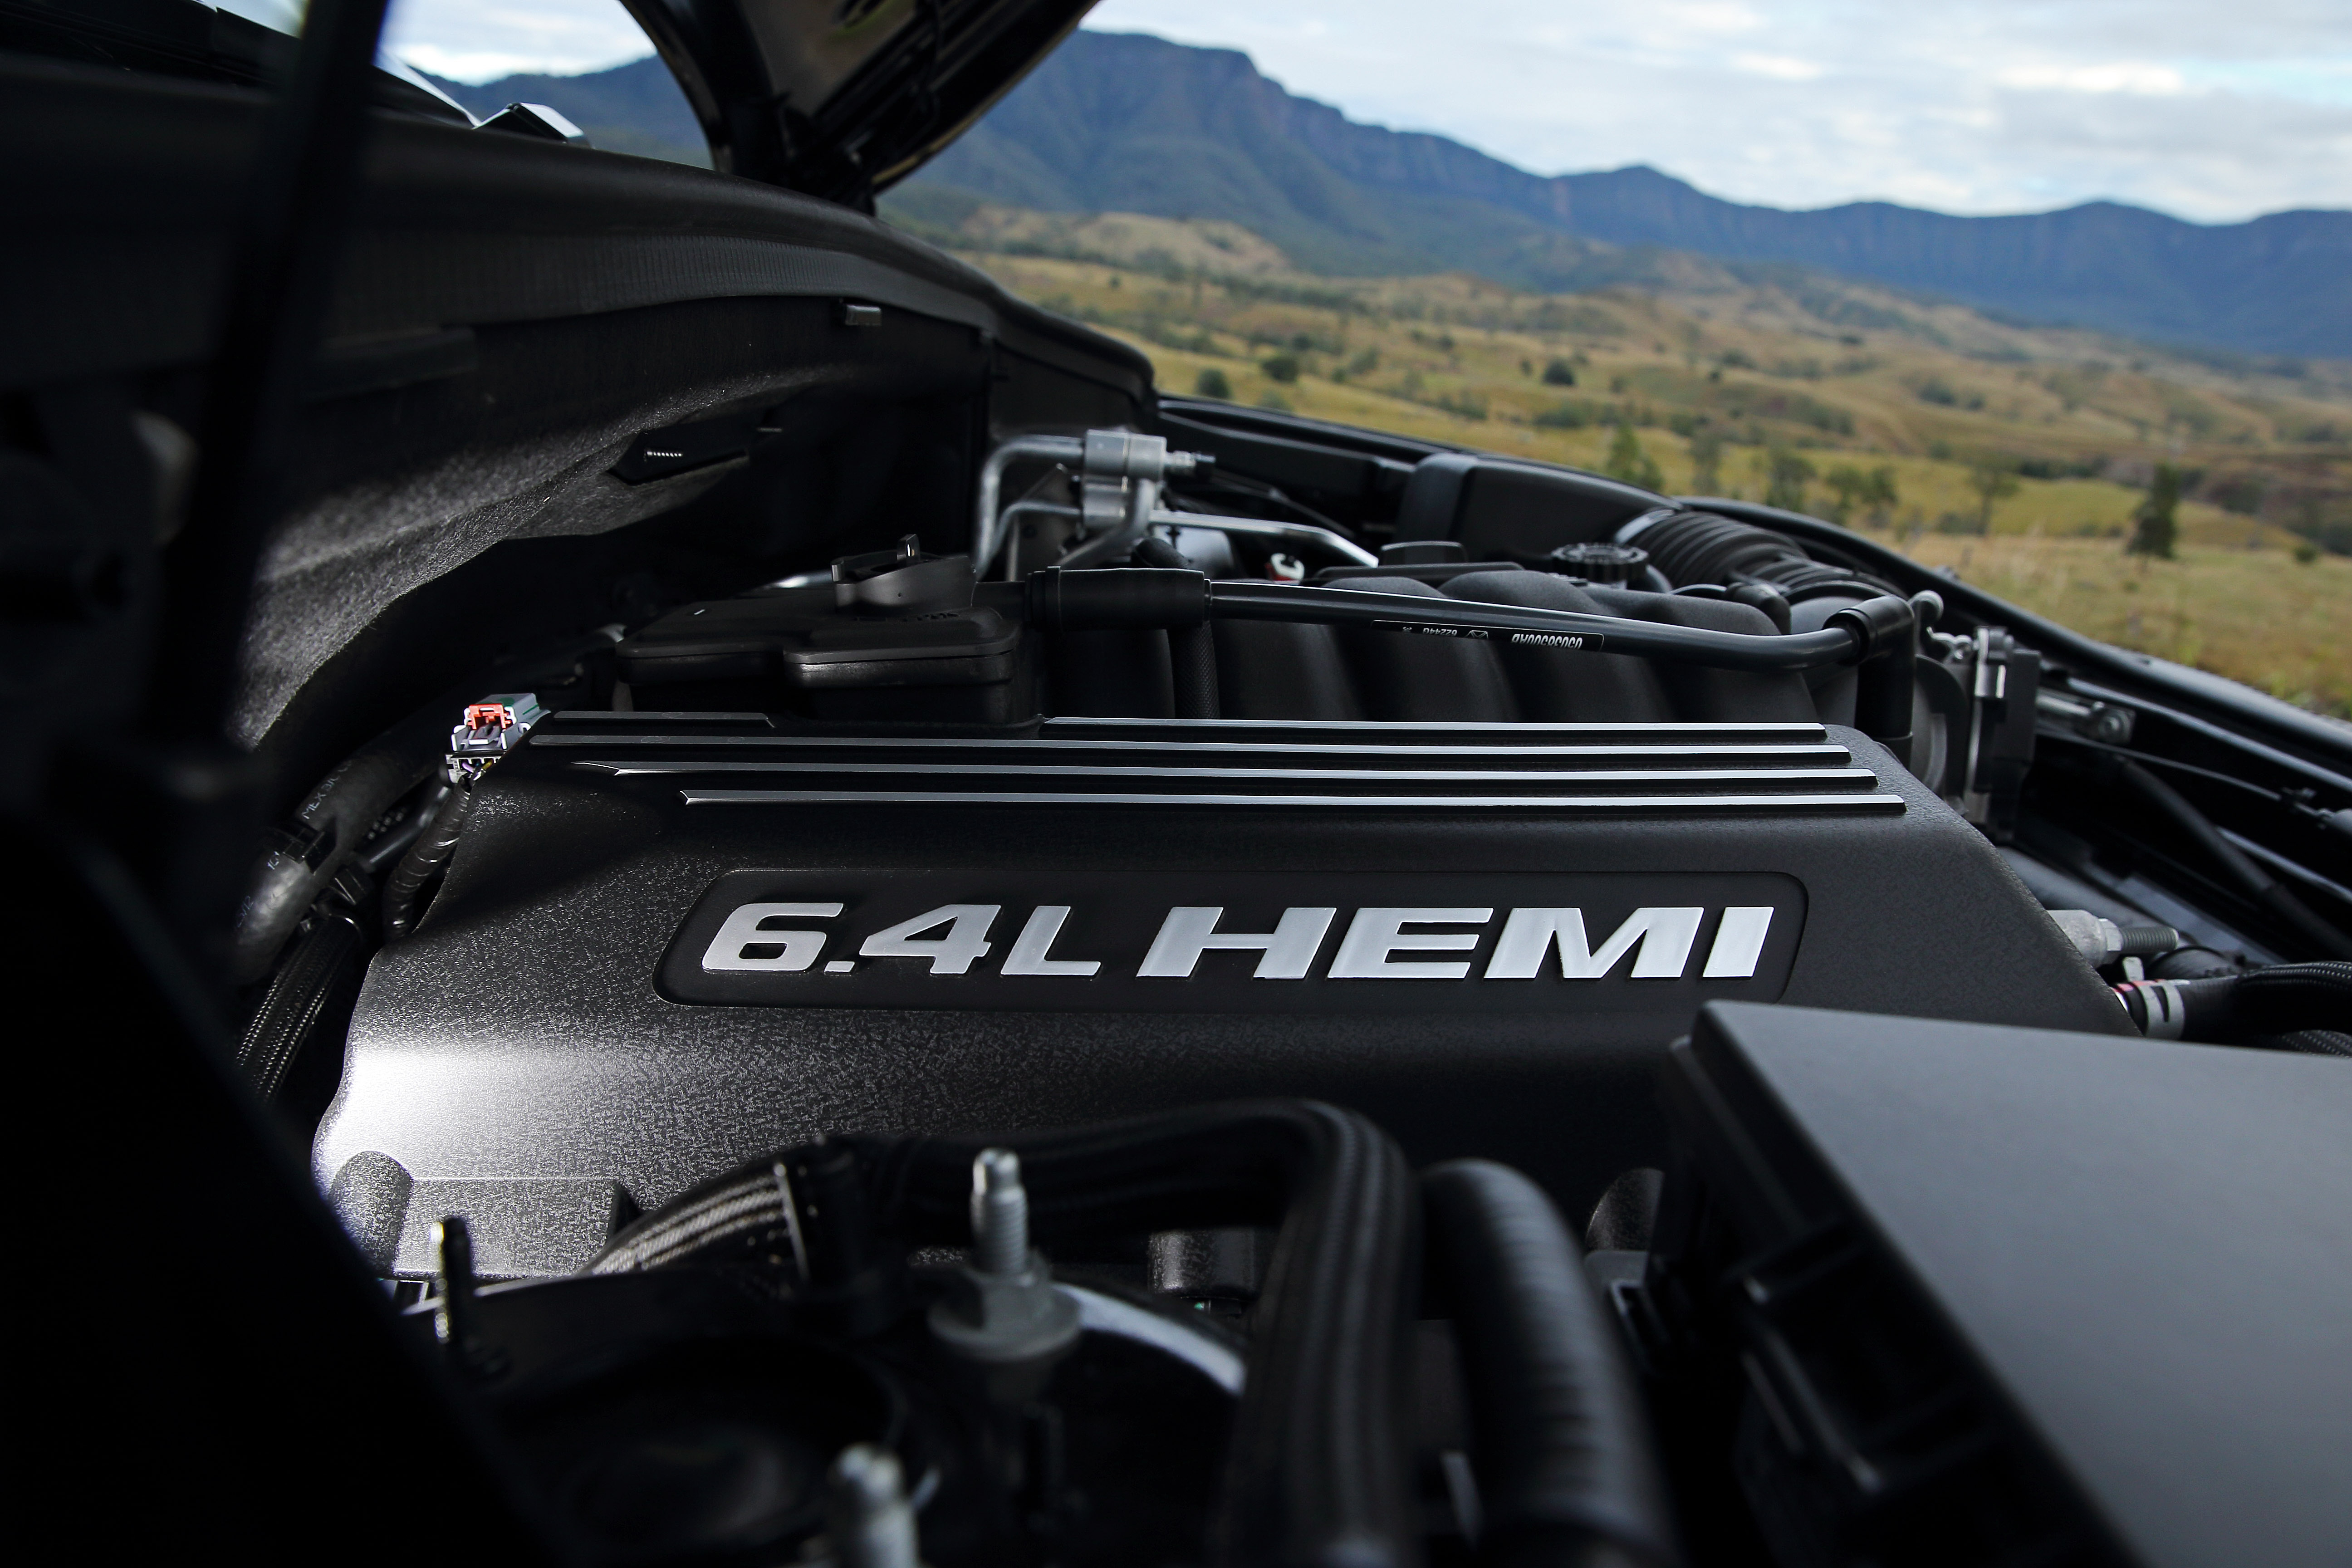 Grand Cherokee SRT 6.4L Hemi V8 engine